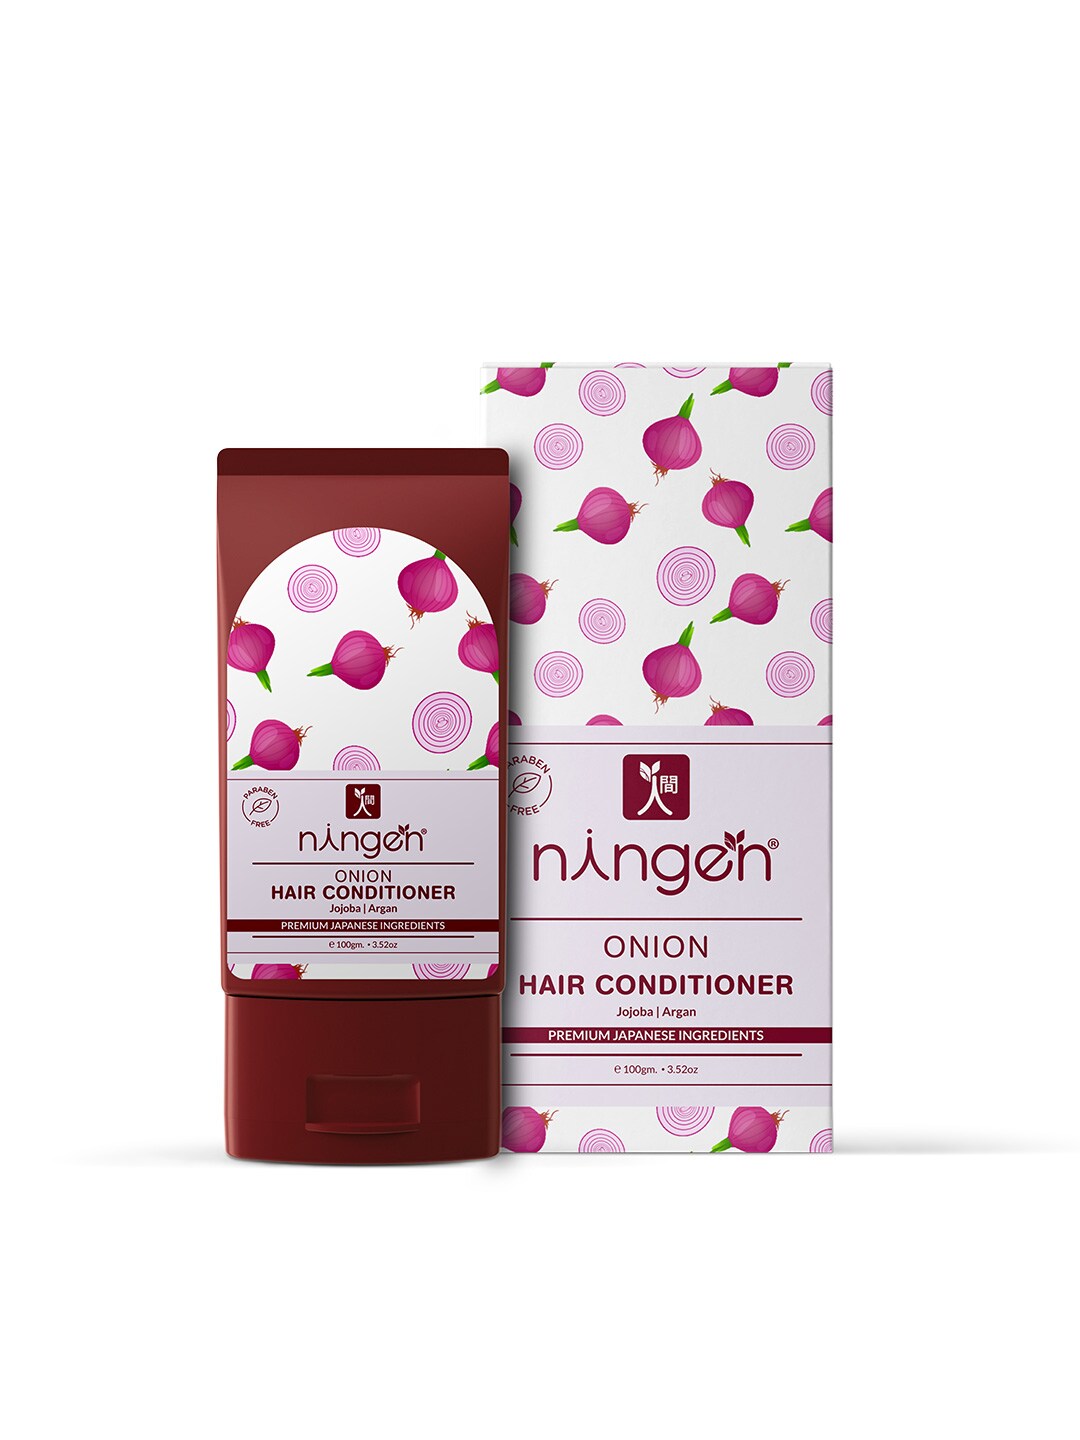 Ningen Onion Hair Conditioner with Jojoba & Argan - 100 g Price in India